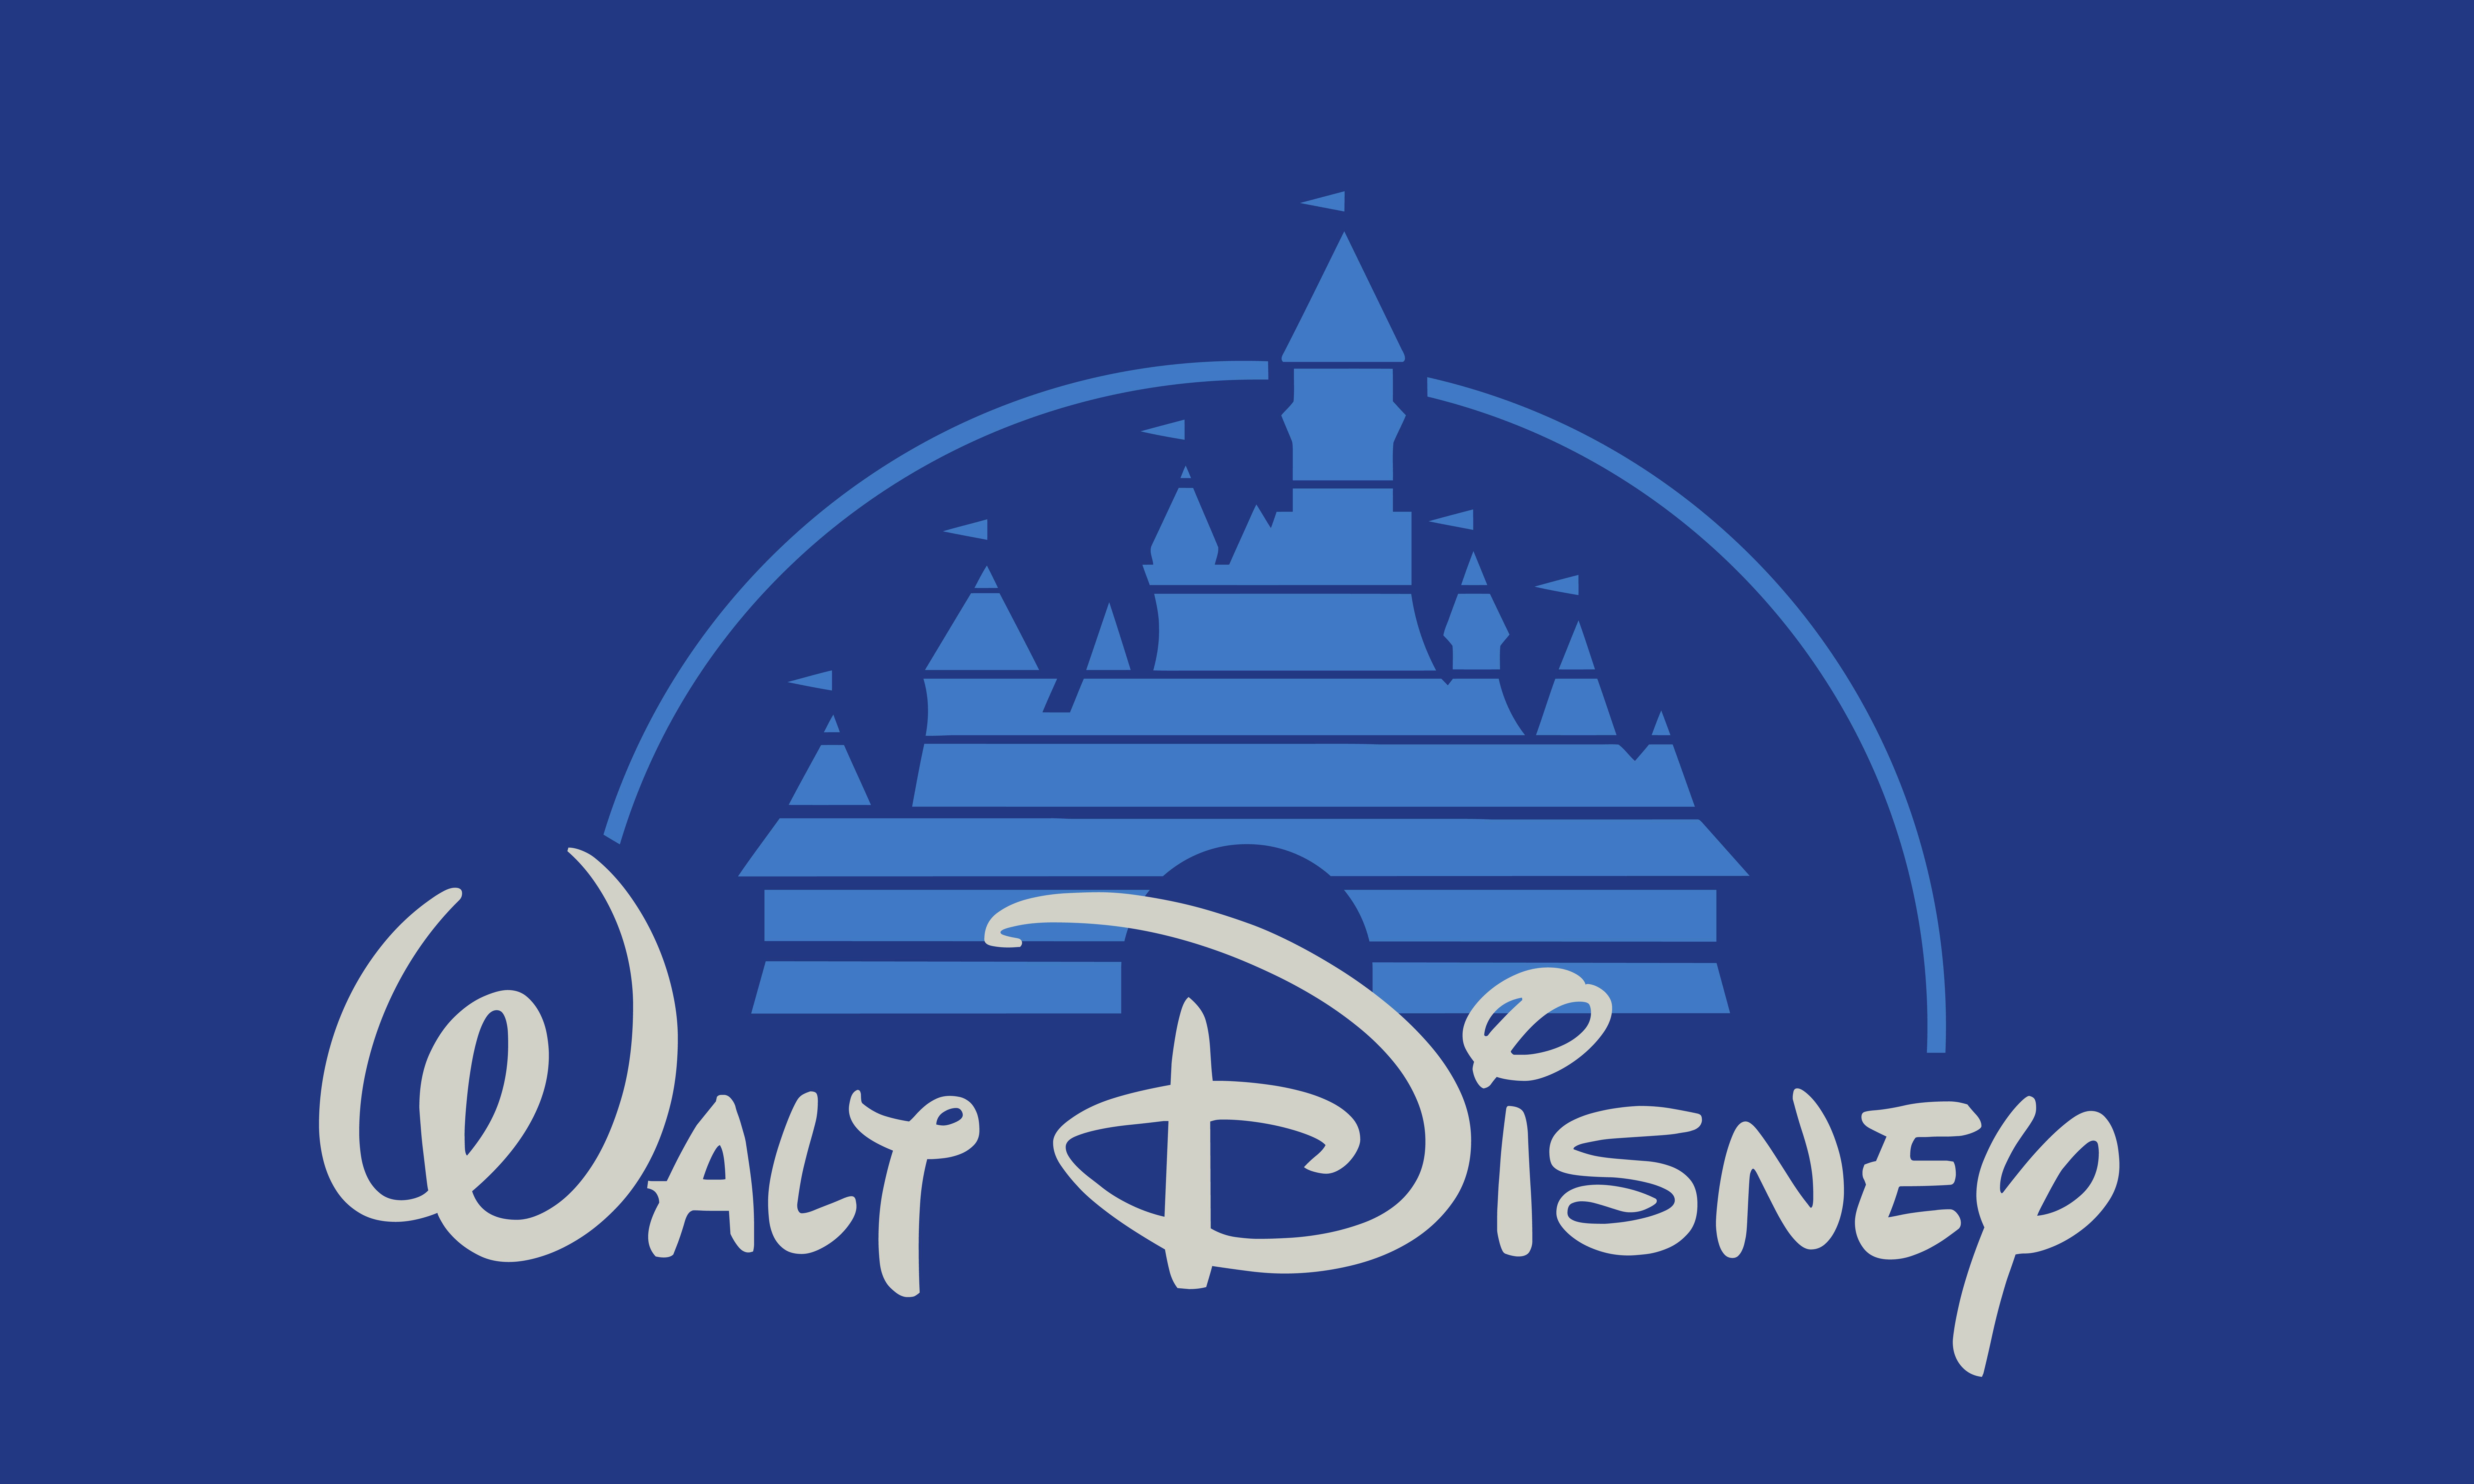 8 bit magic kingdom walt disney pictures logo